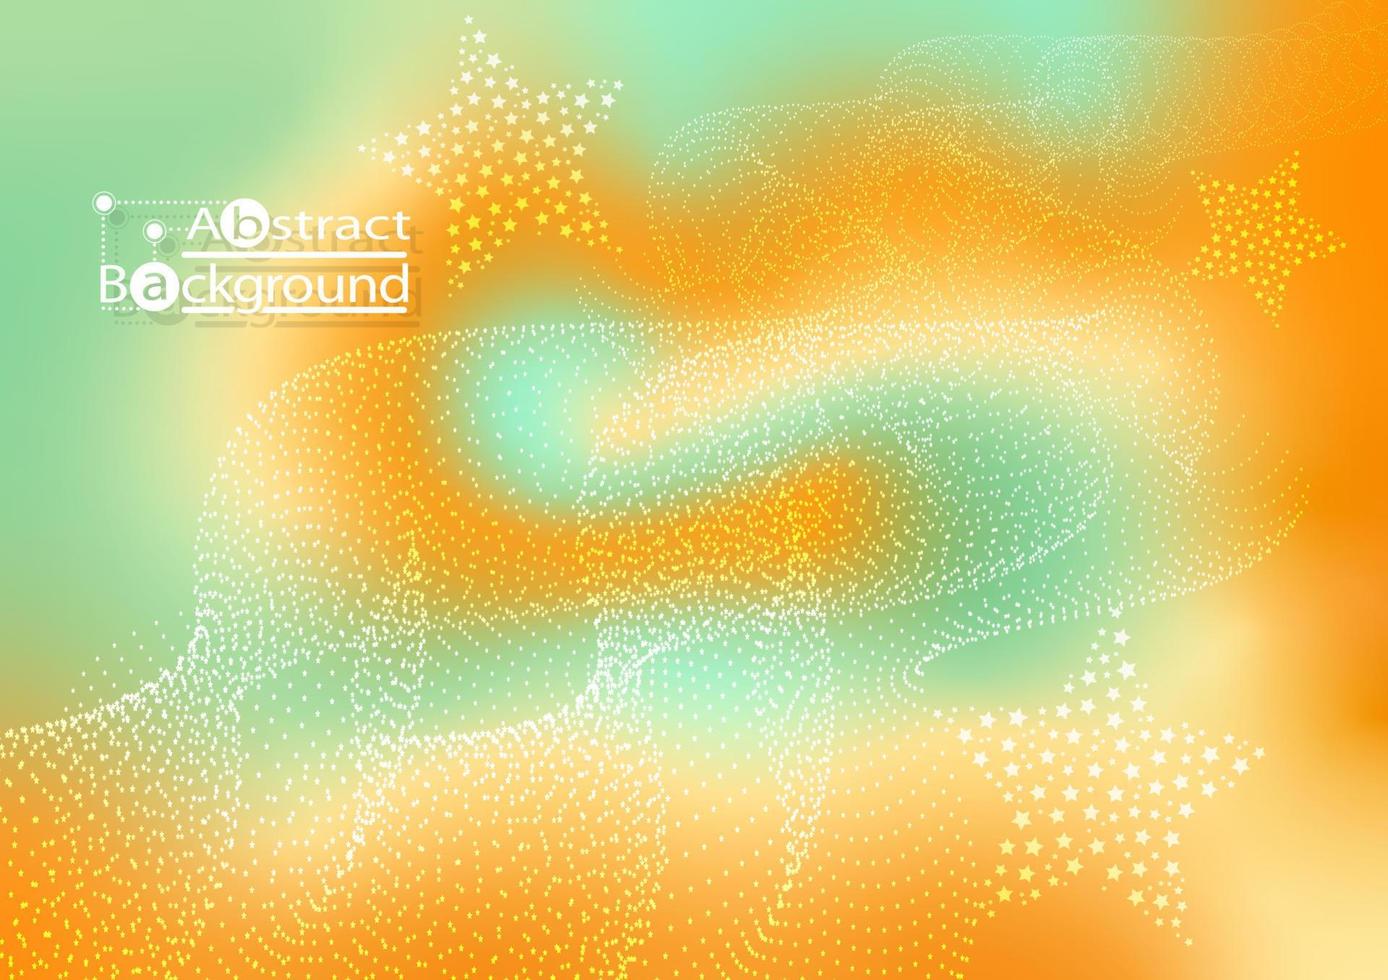 abstrakt bakgrund. Vinka effekt halvton. orange tona på de bakgrund lutning. vektor illustration.